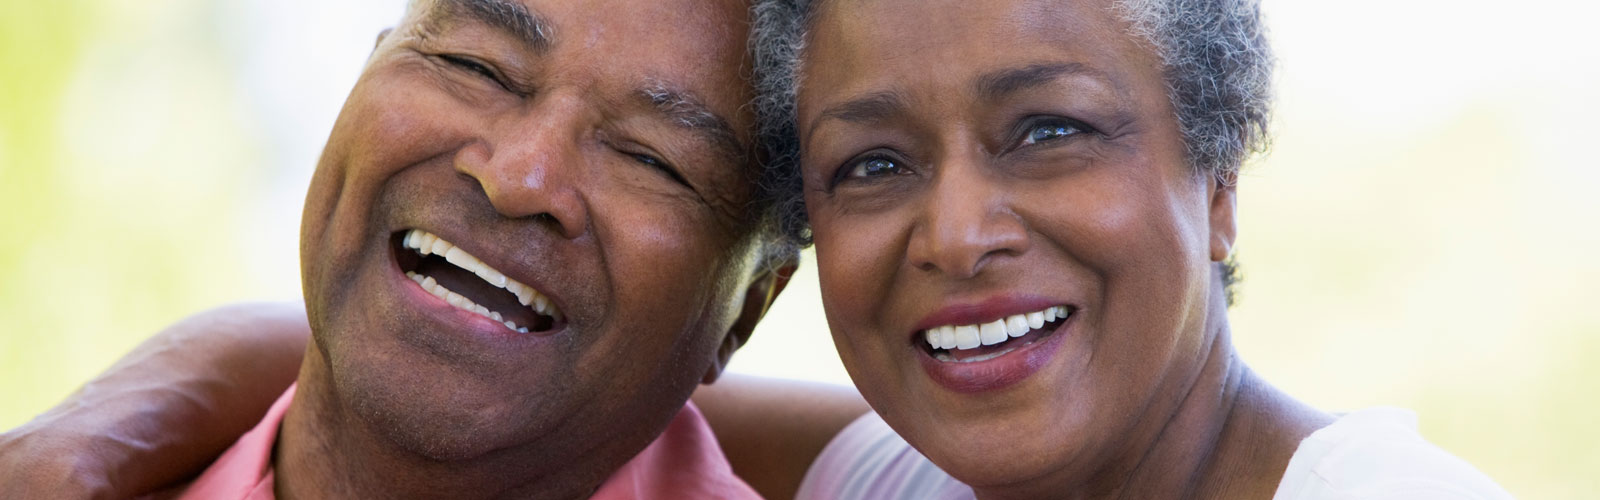 Happy african american elderly couple